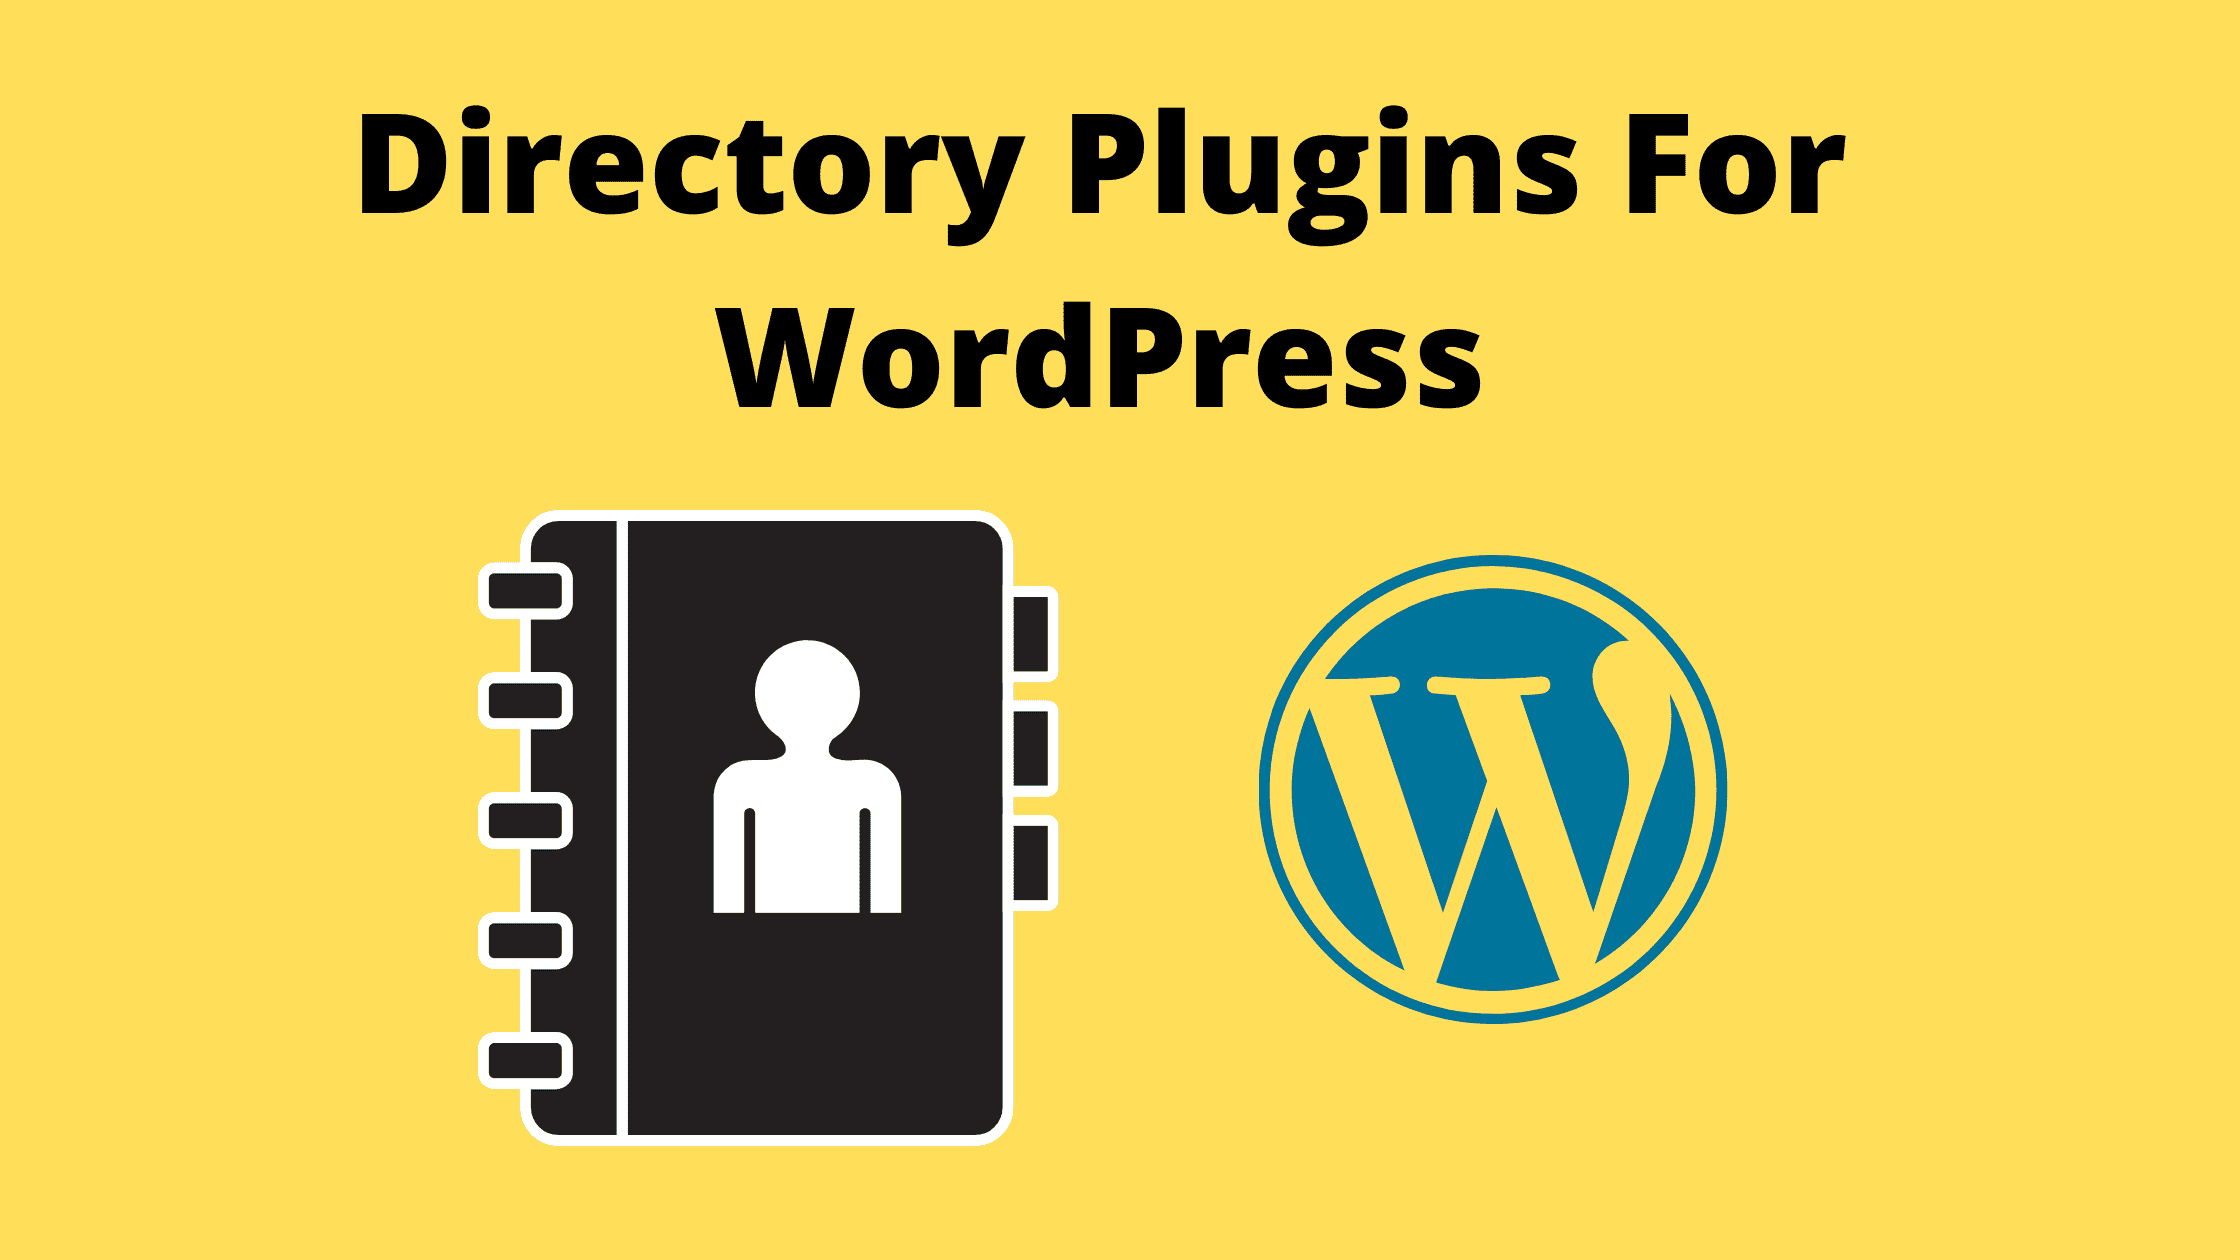 Directory Plugins For WordPress